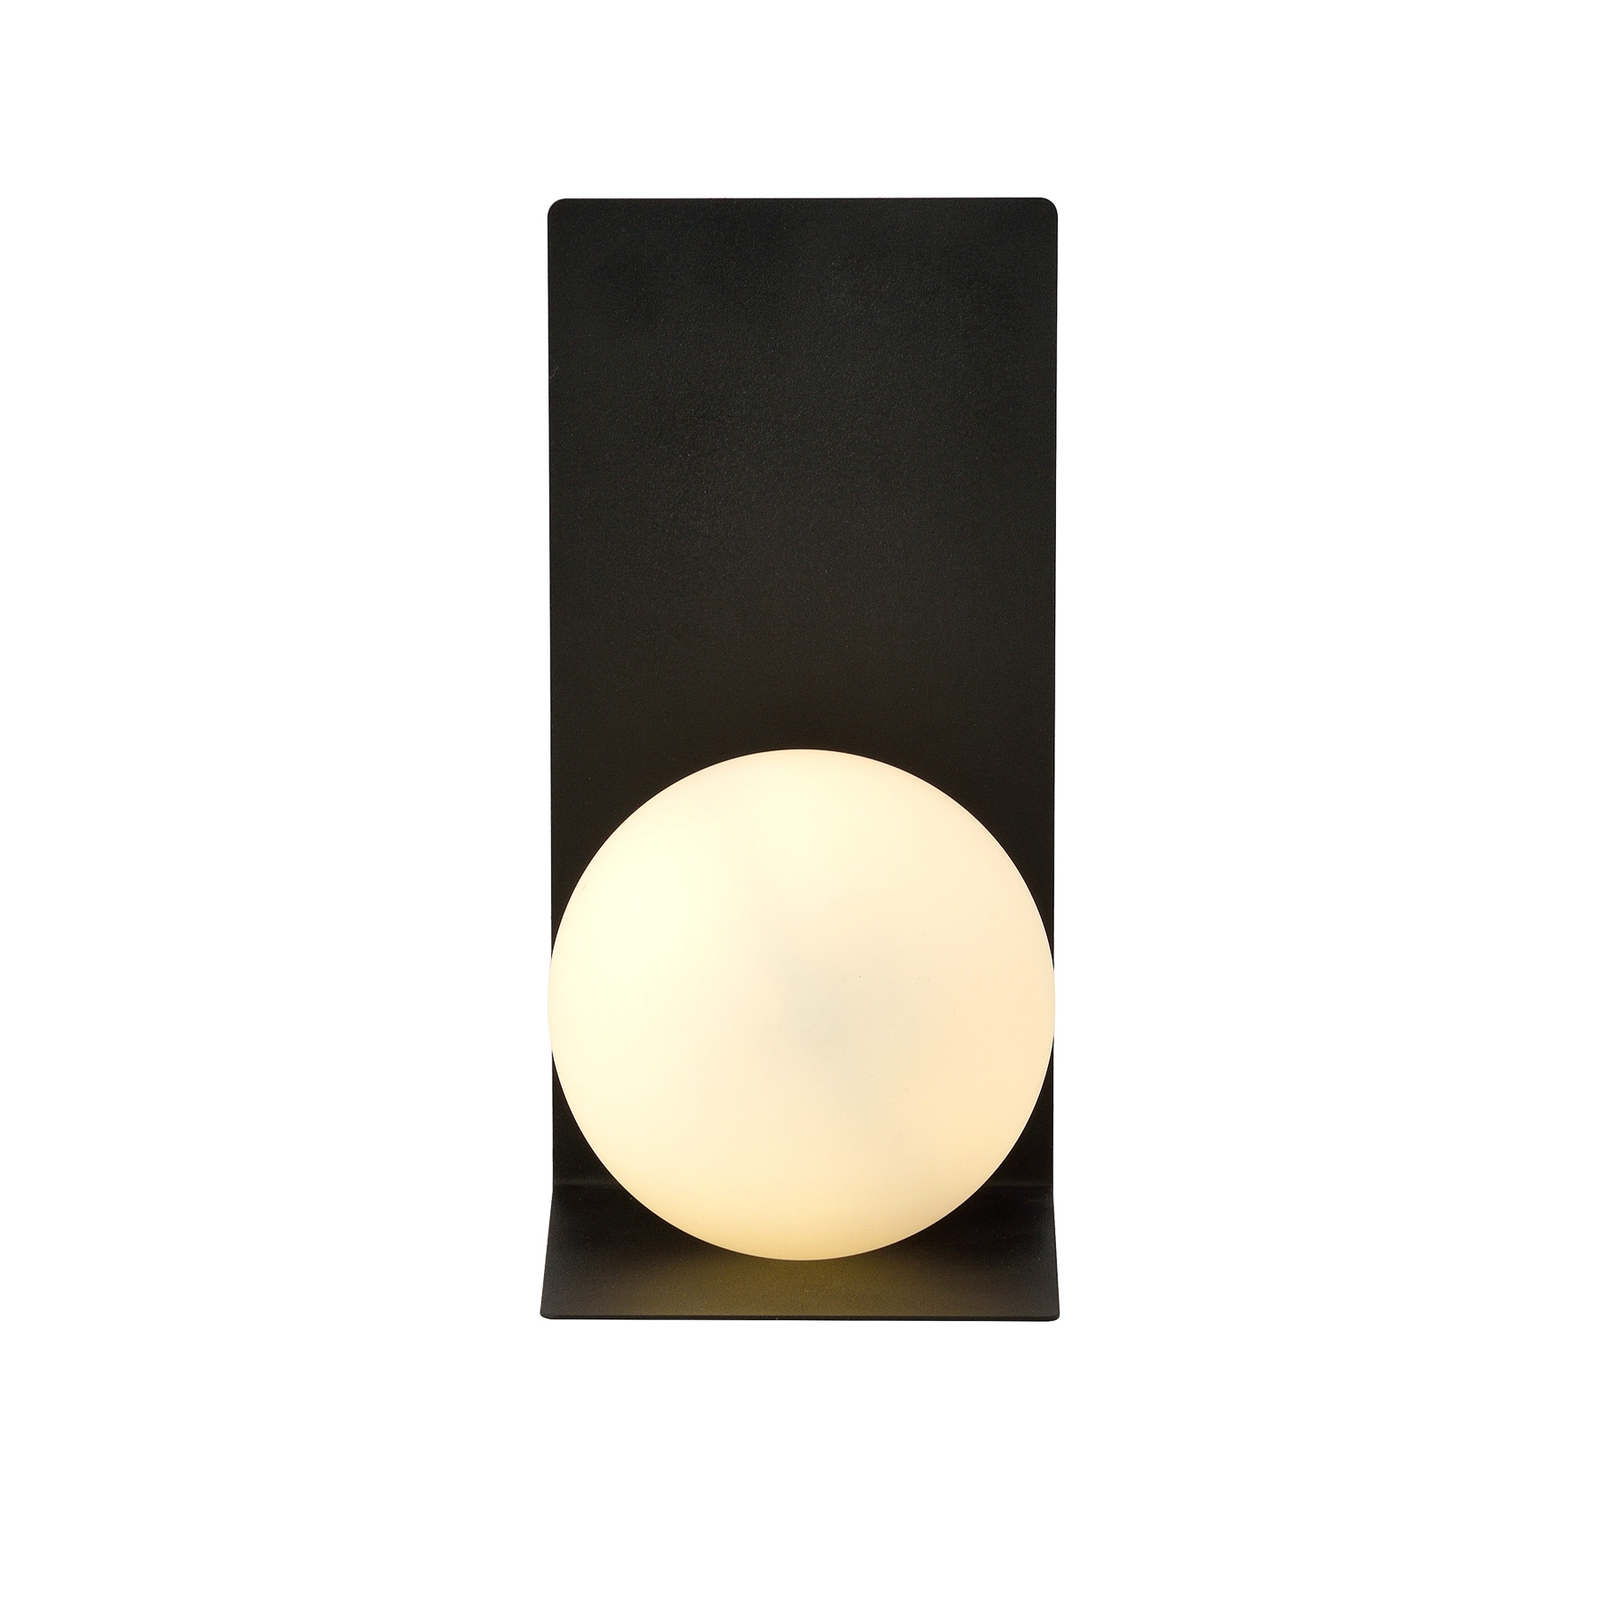 Wandlampe Form 5, 15 cm x 30 cm, schwarz/opal